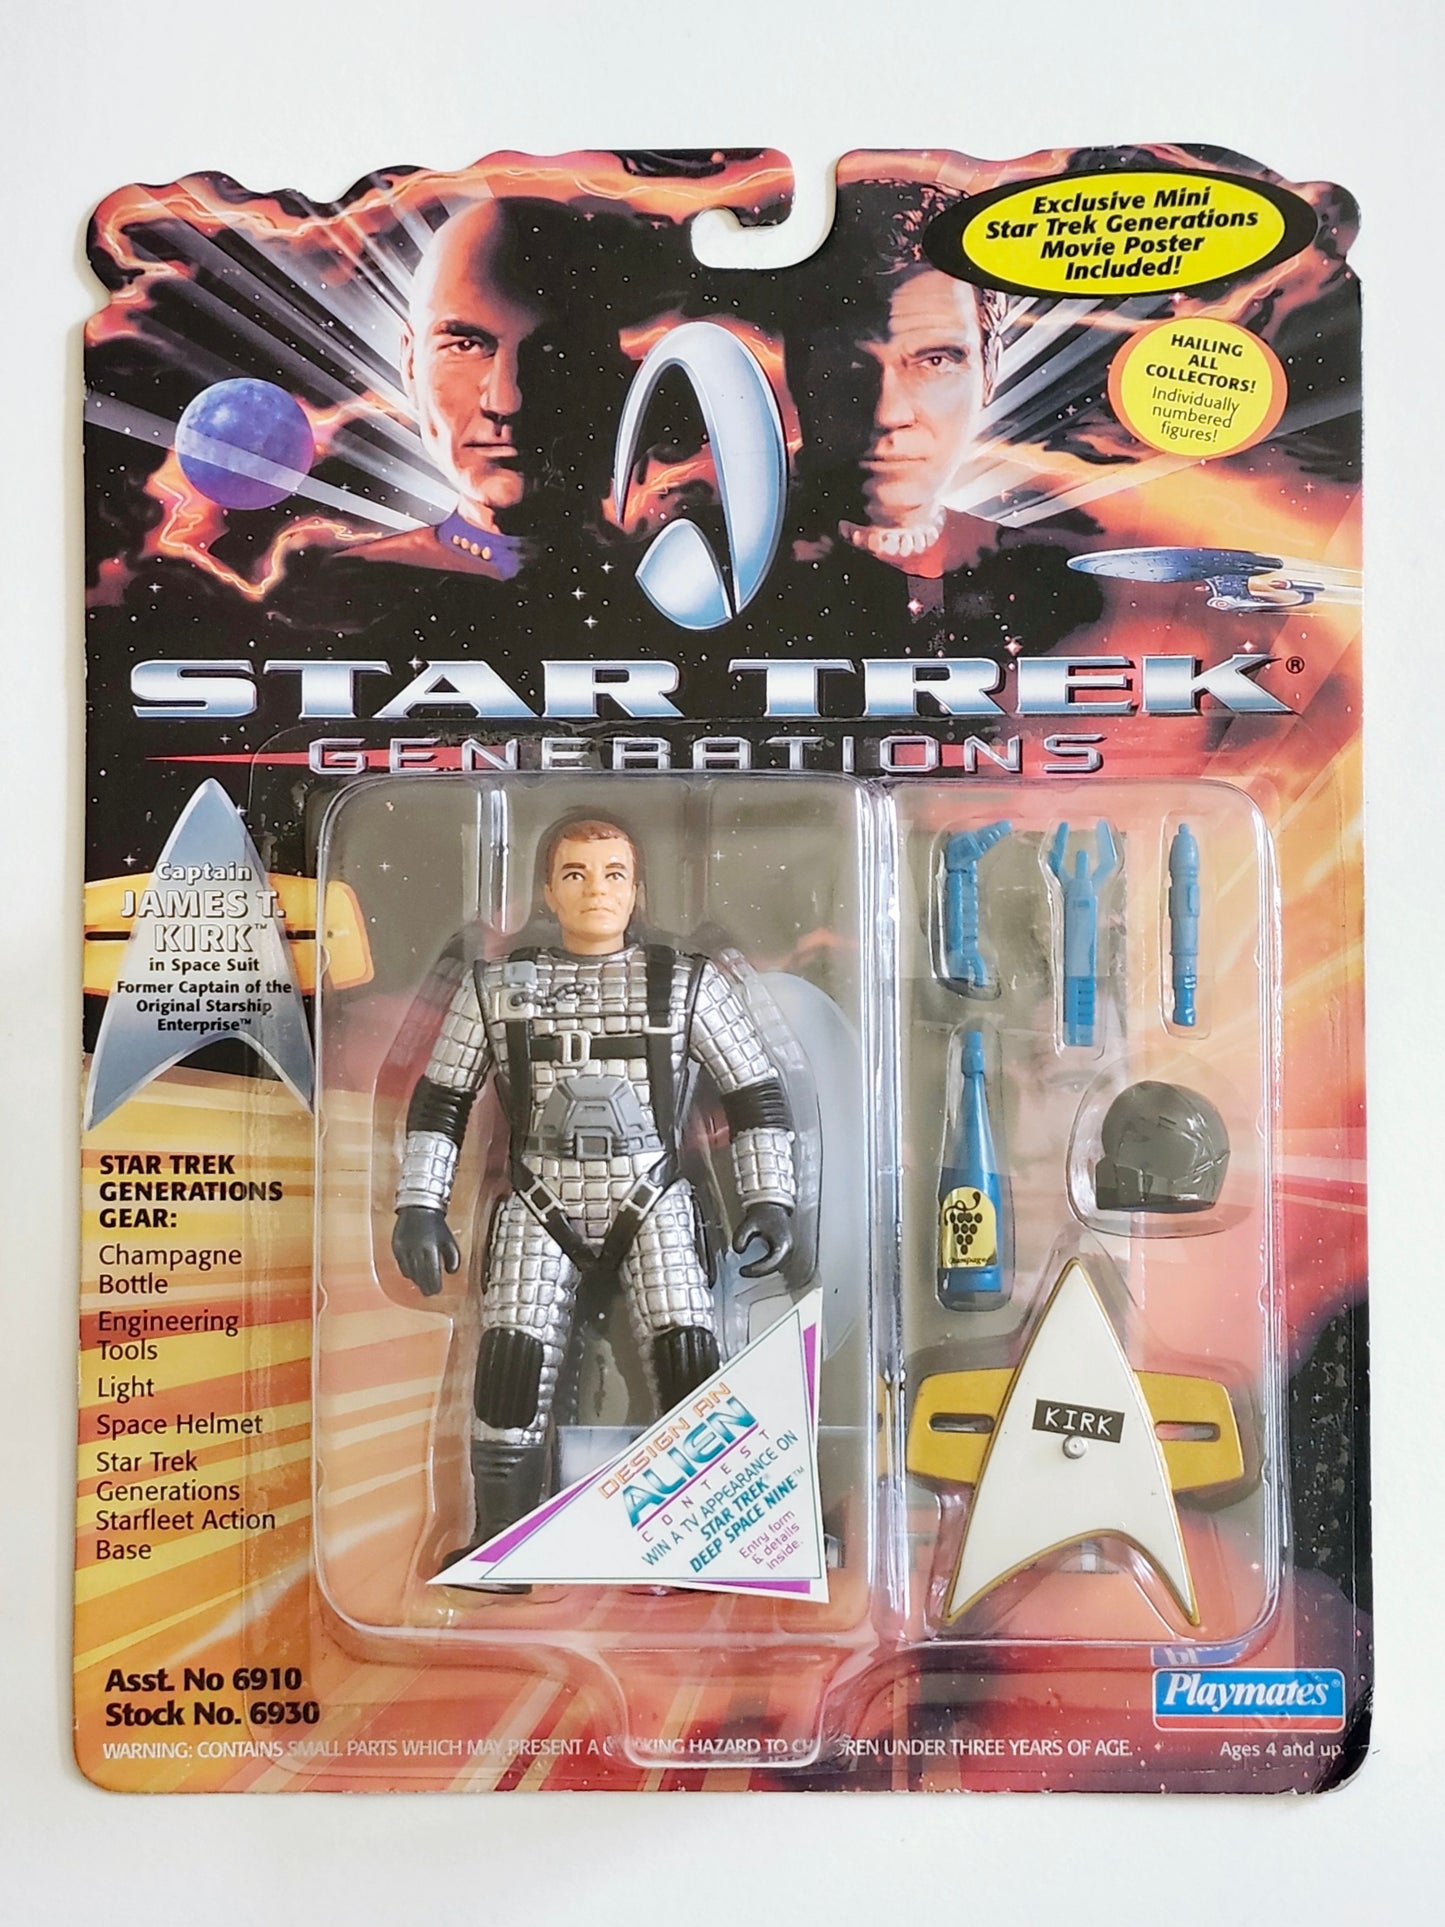 Star Trek: Generations Captain James T. Kirk in Space Suit Action Figure